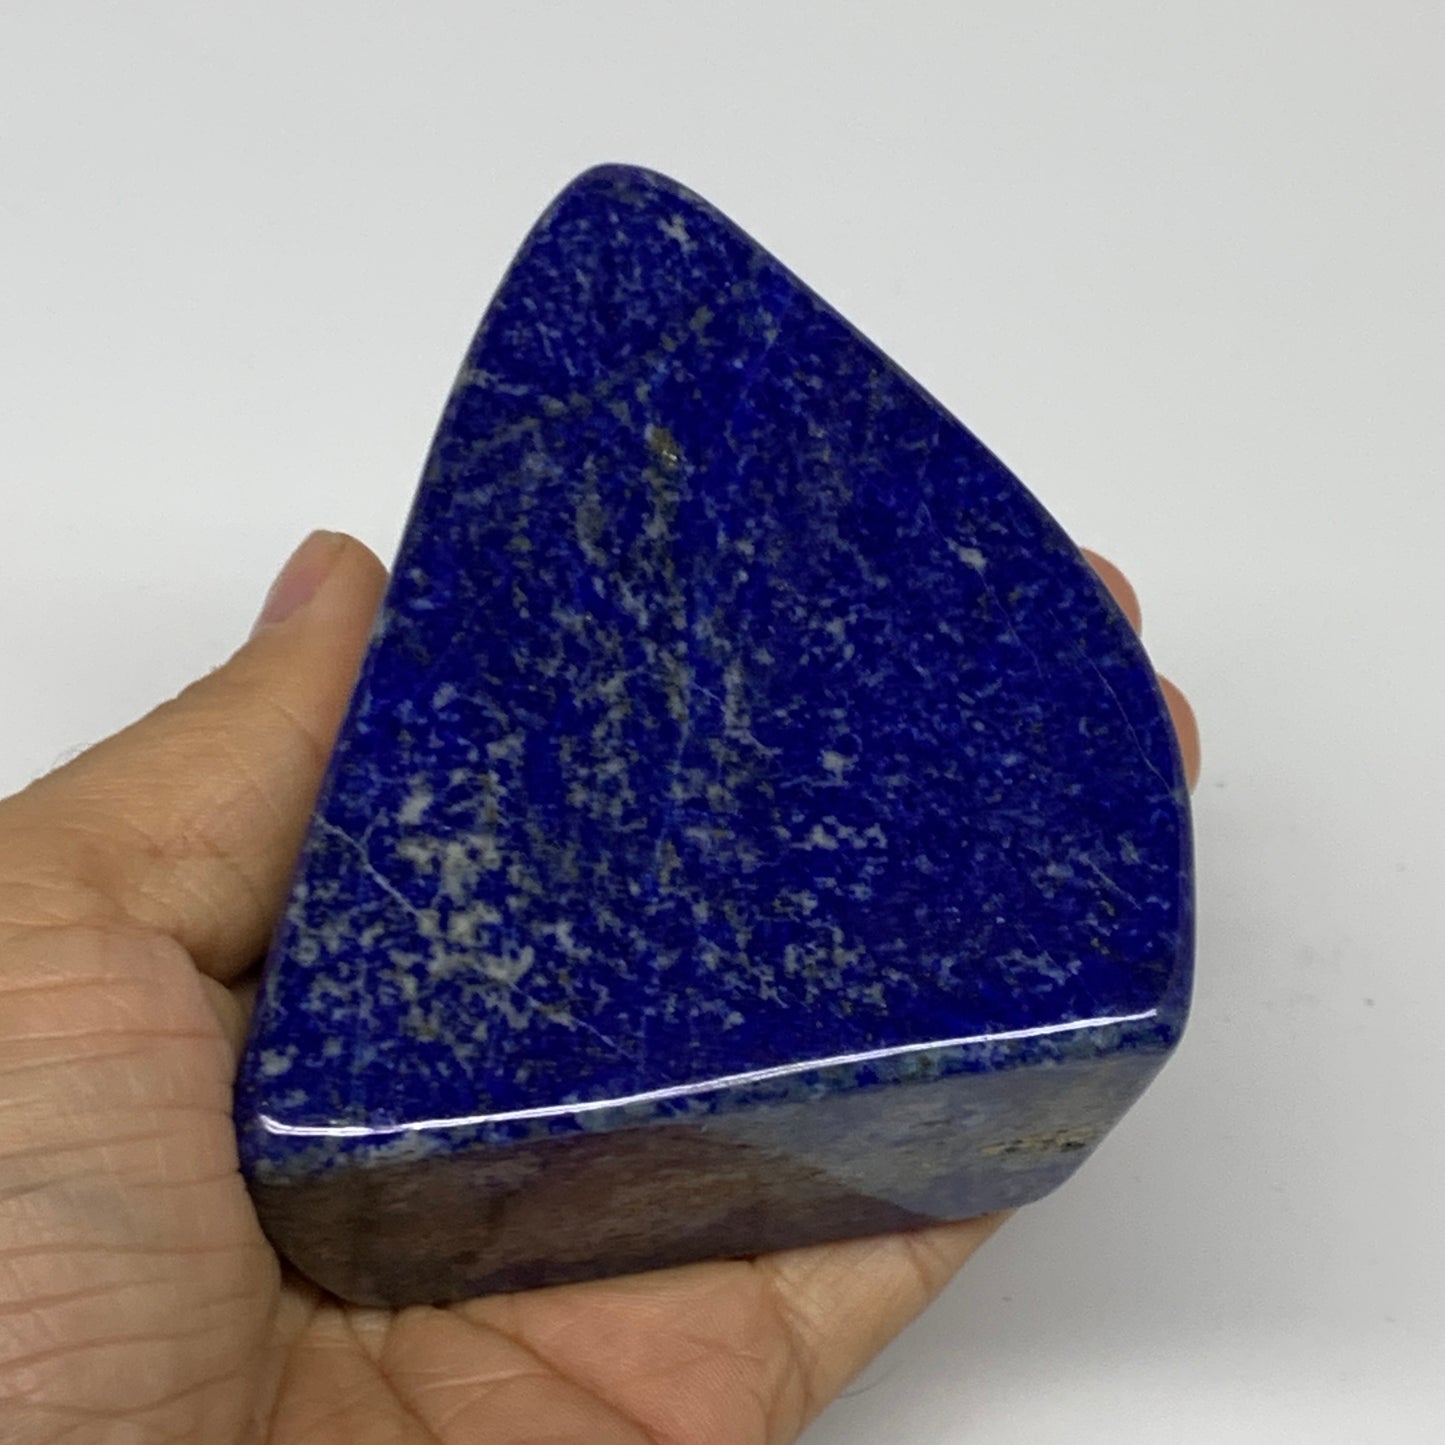 0.76 lbs, 3.4"x2.9"x1.3", Natural Freeform Lapis Lazuli from Afghanistan, B32976